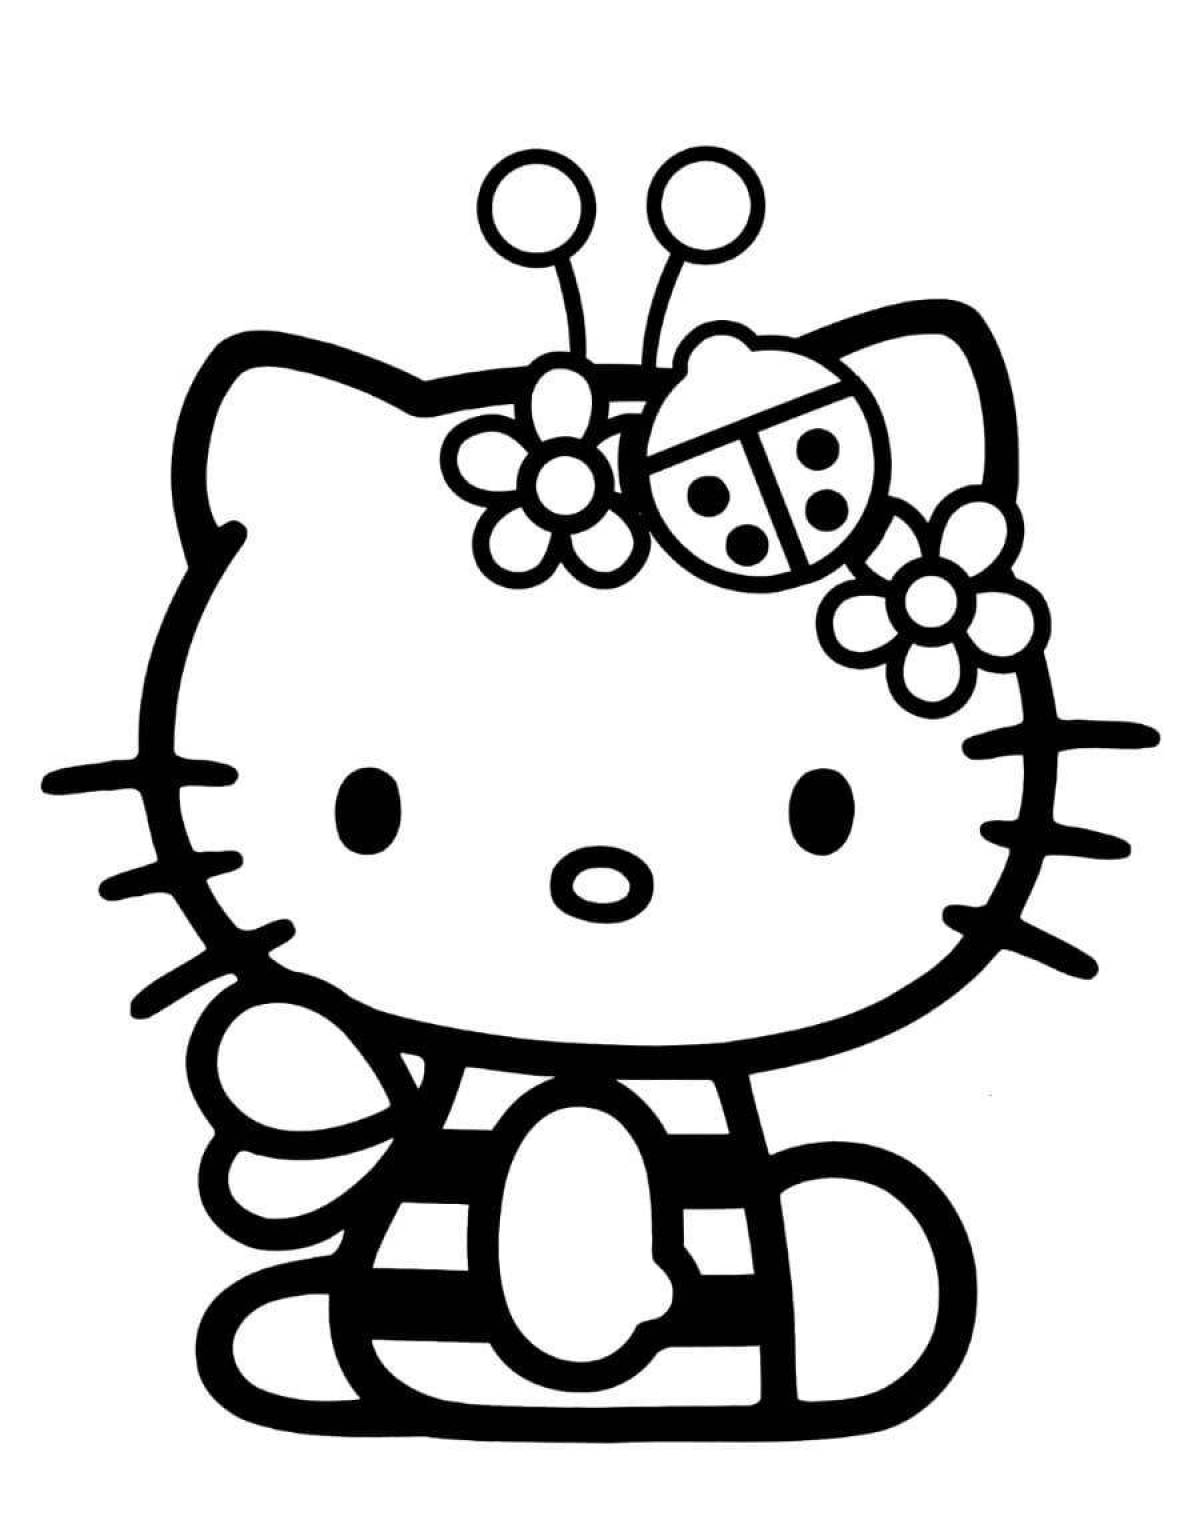 Hallow kitty glamor drawing